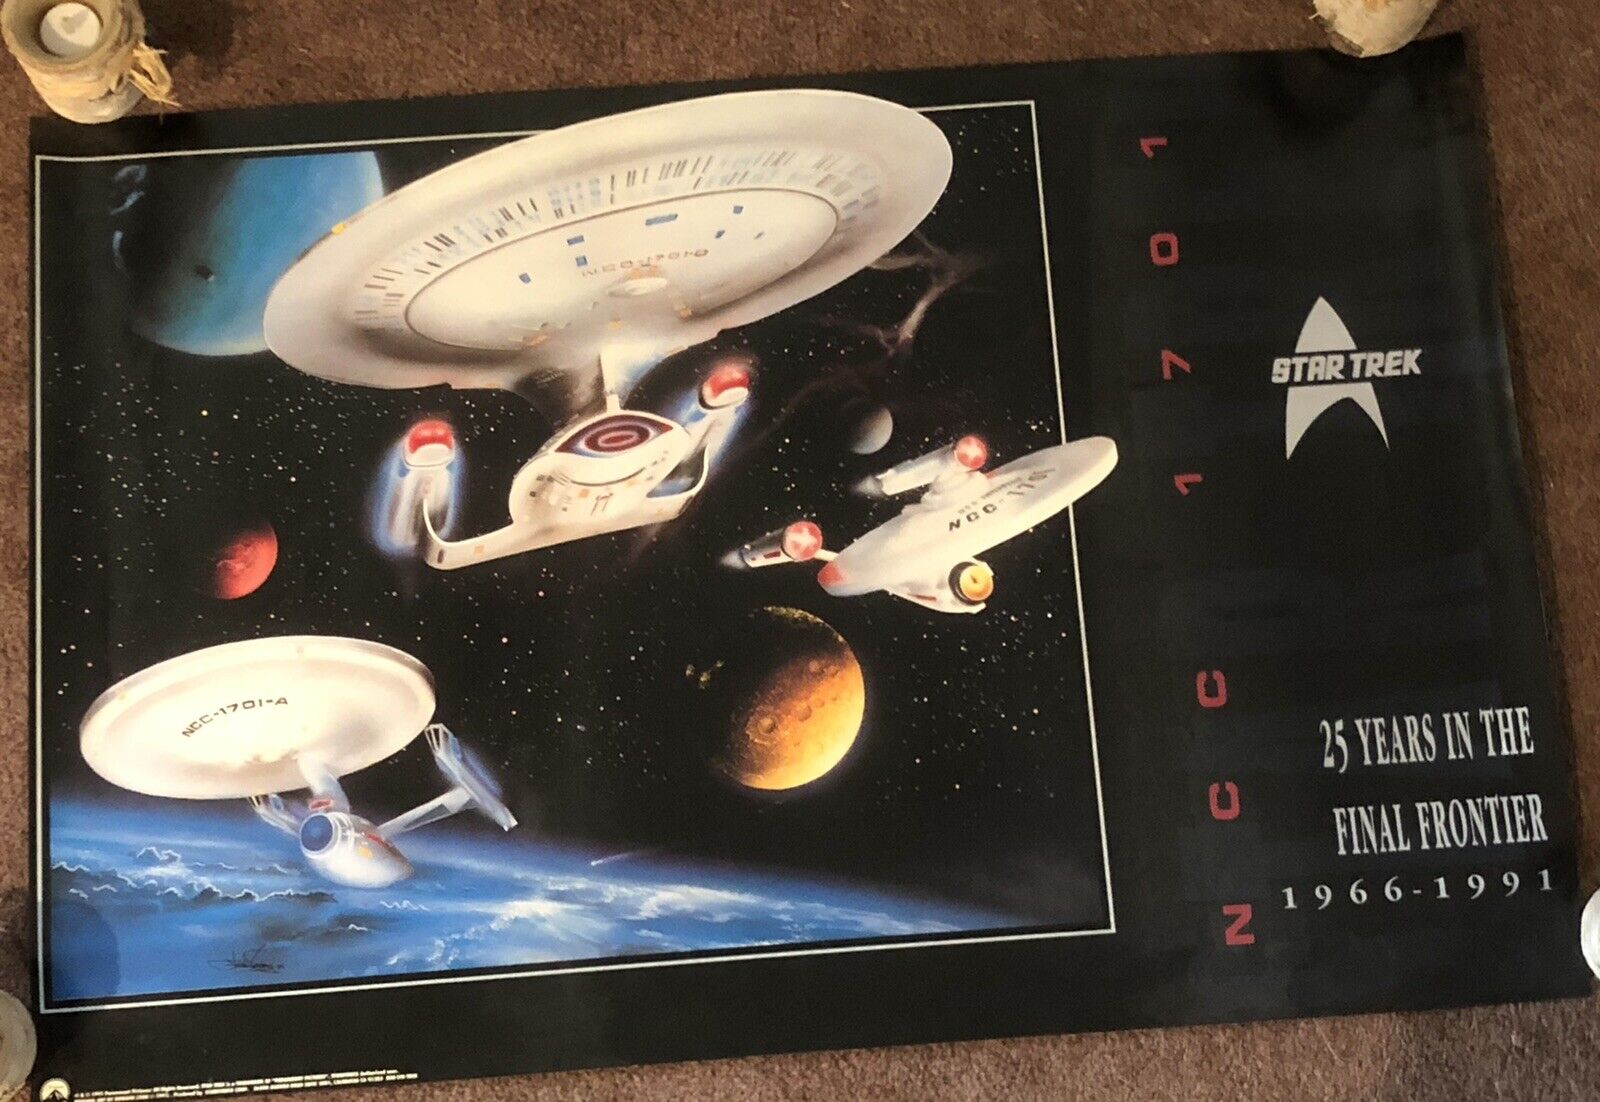 Star Trek U.S.S Enterprise NCC-1701 25 Years in The Final Frontier Poster 1991